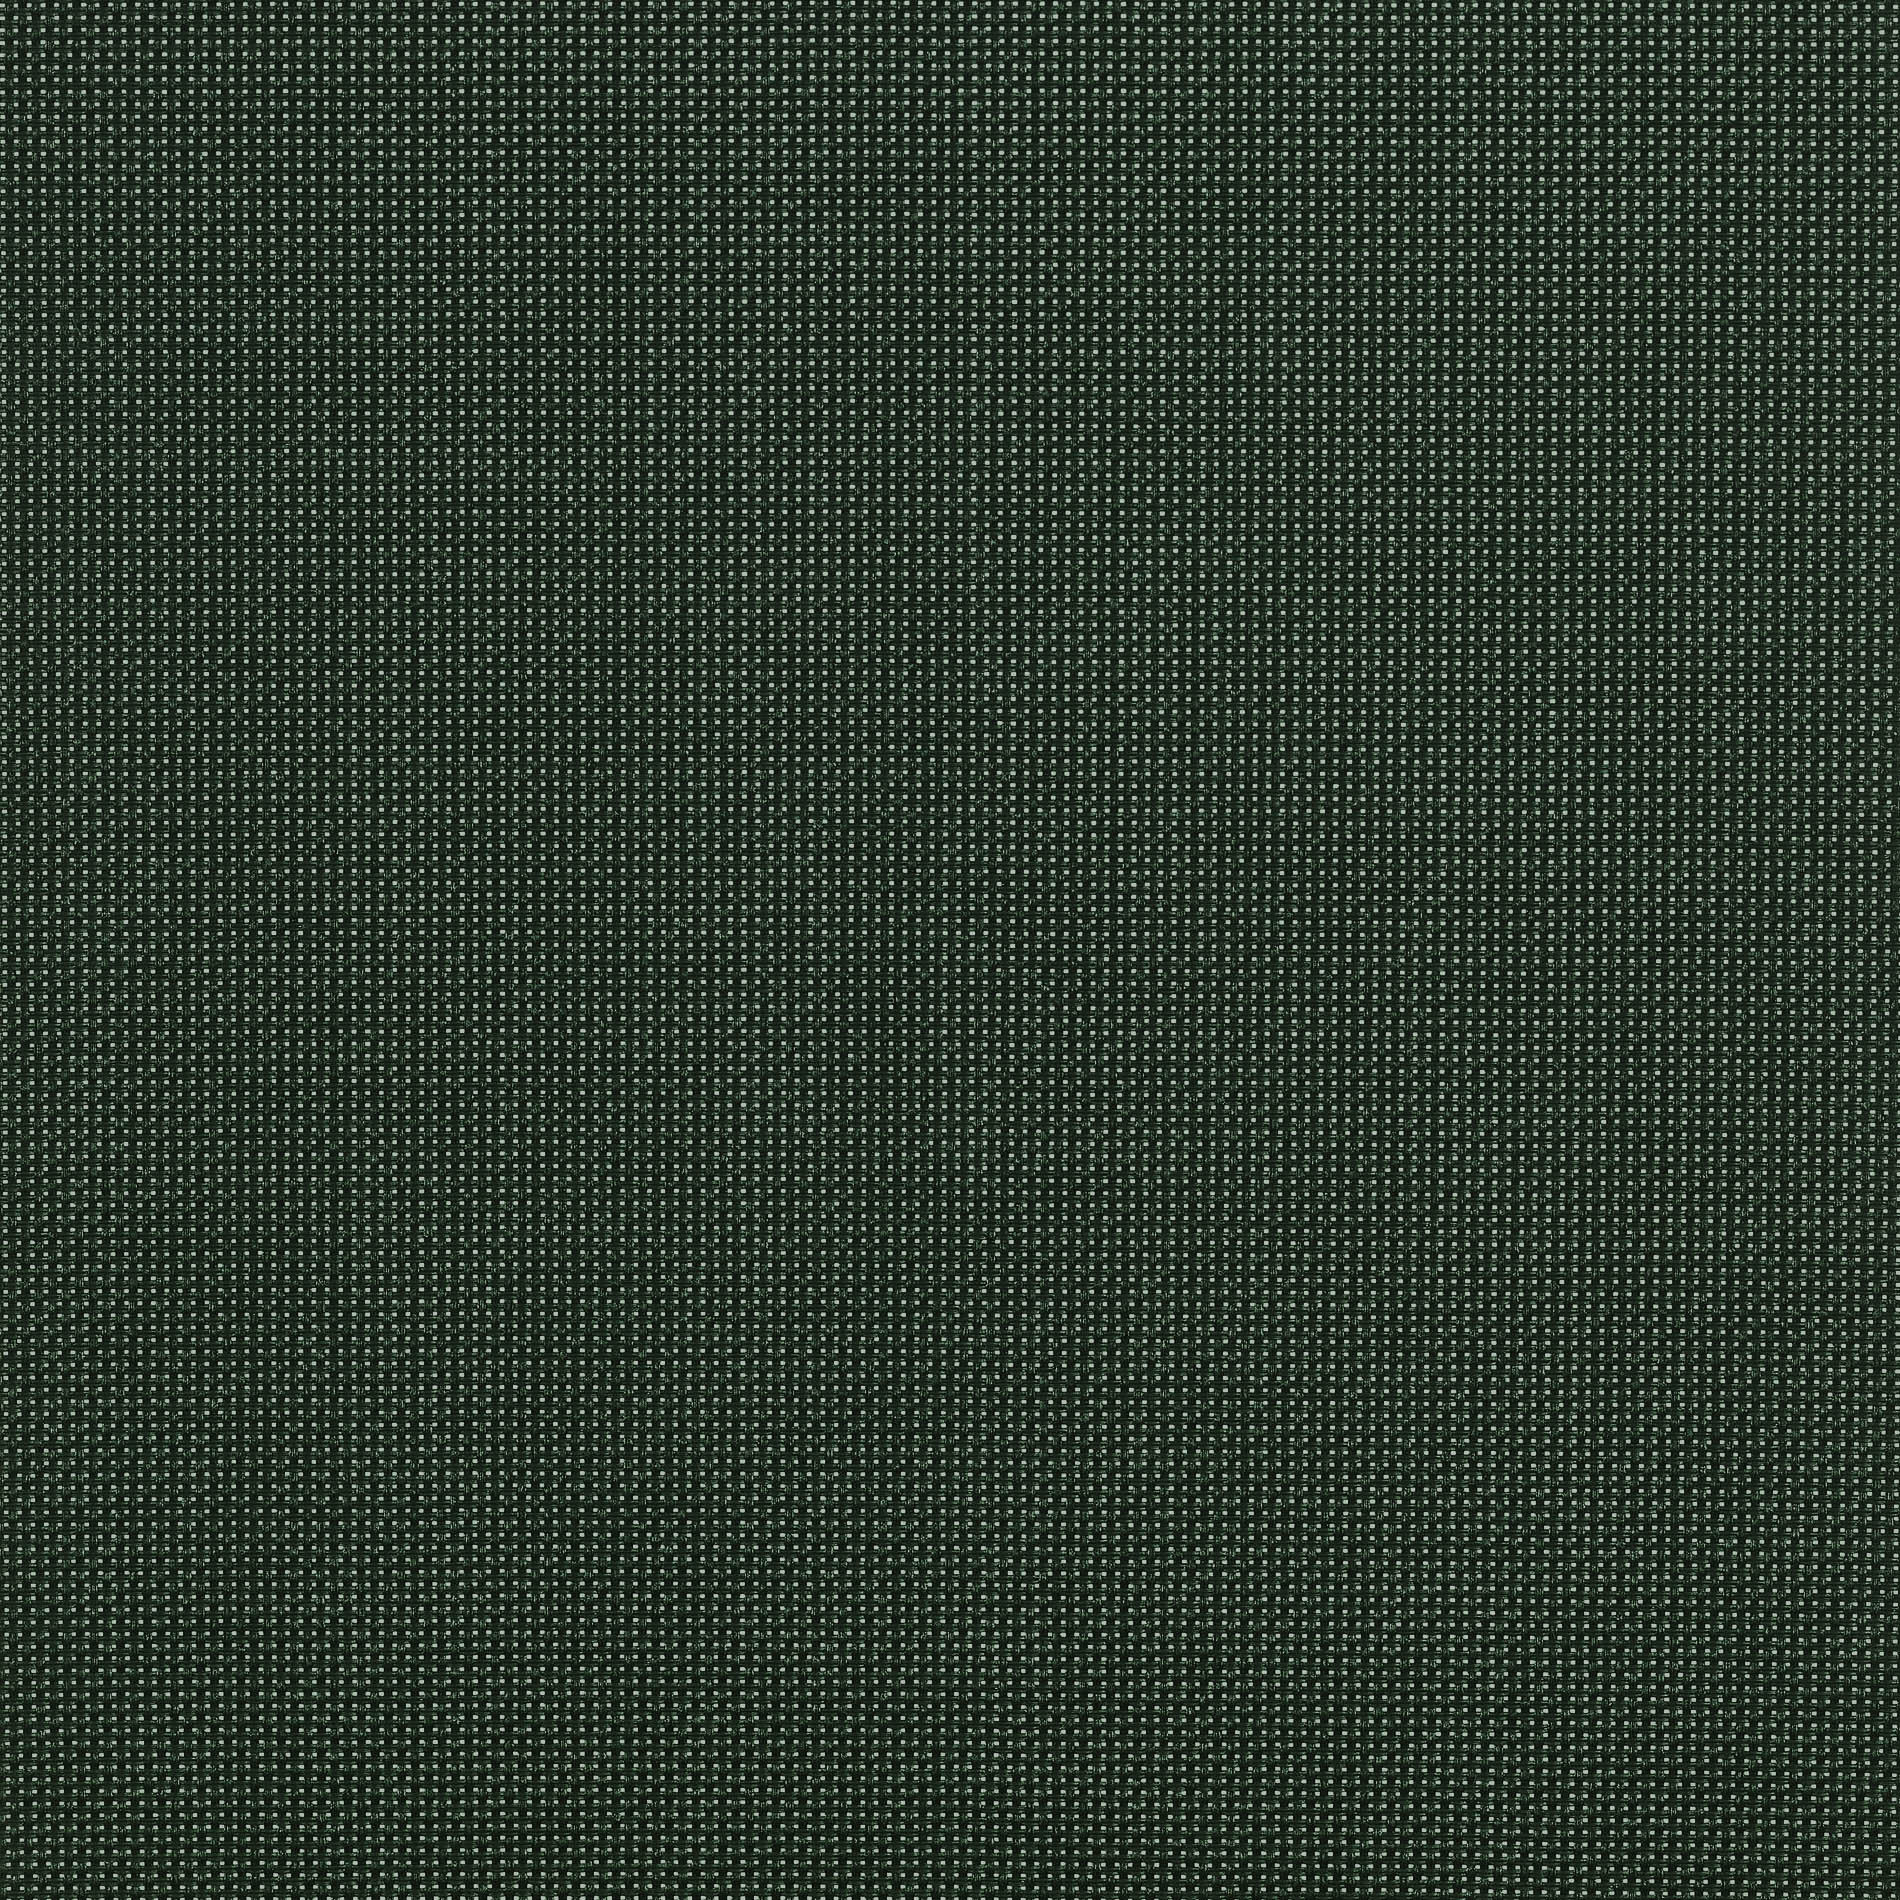 Altex - Fabric - NATTÉ 5% - Charcoal/Forest - 930993_TEMP_2